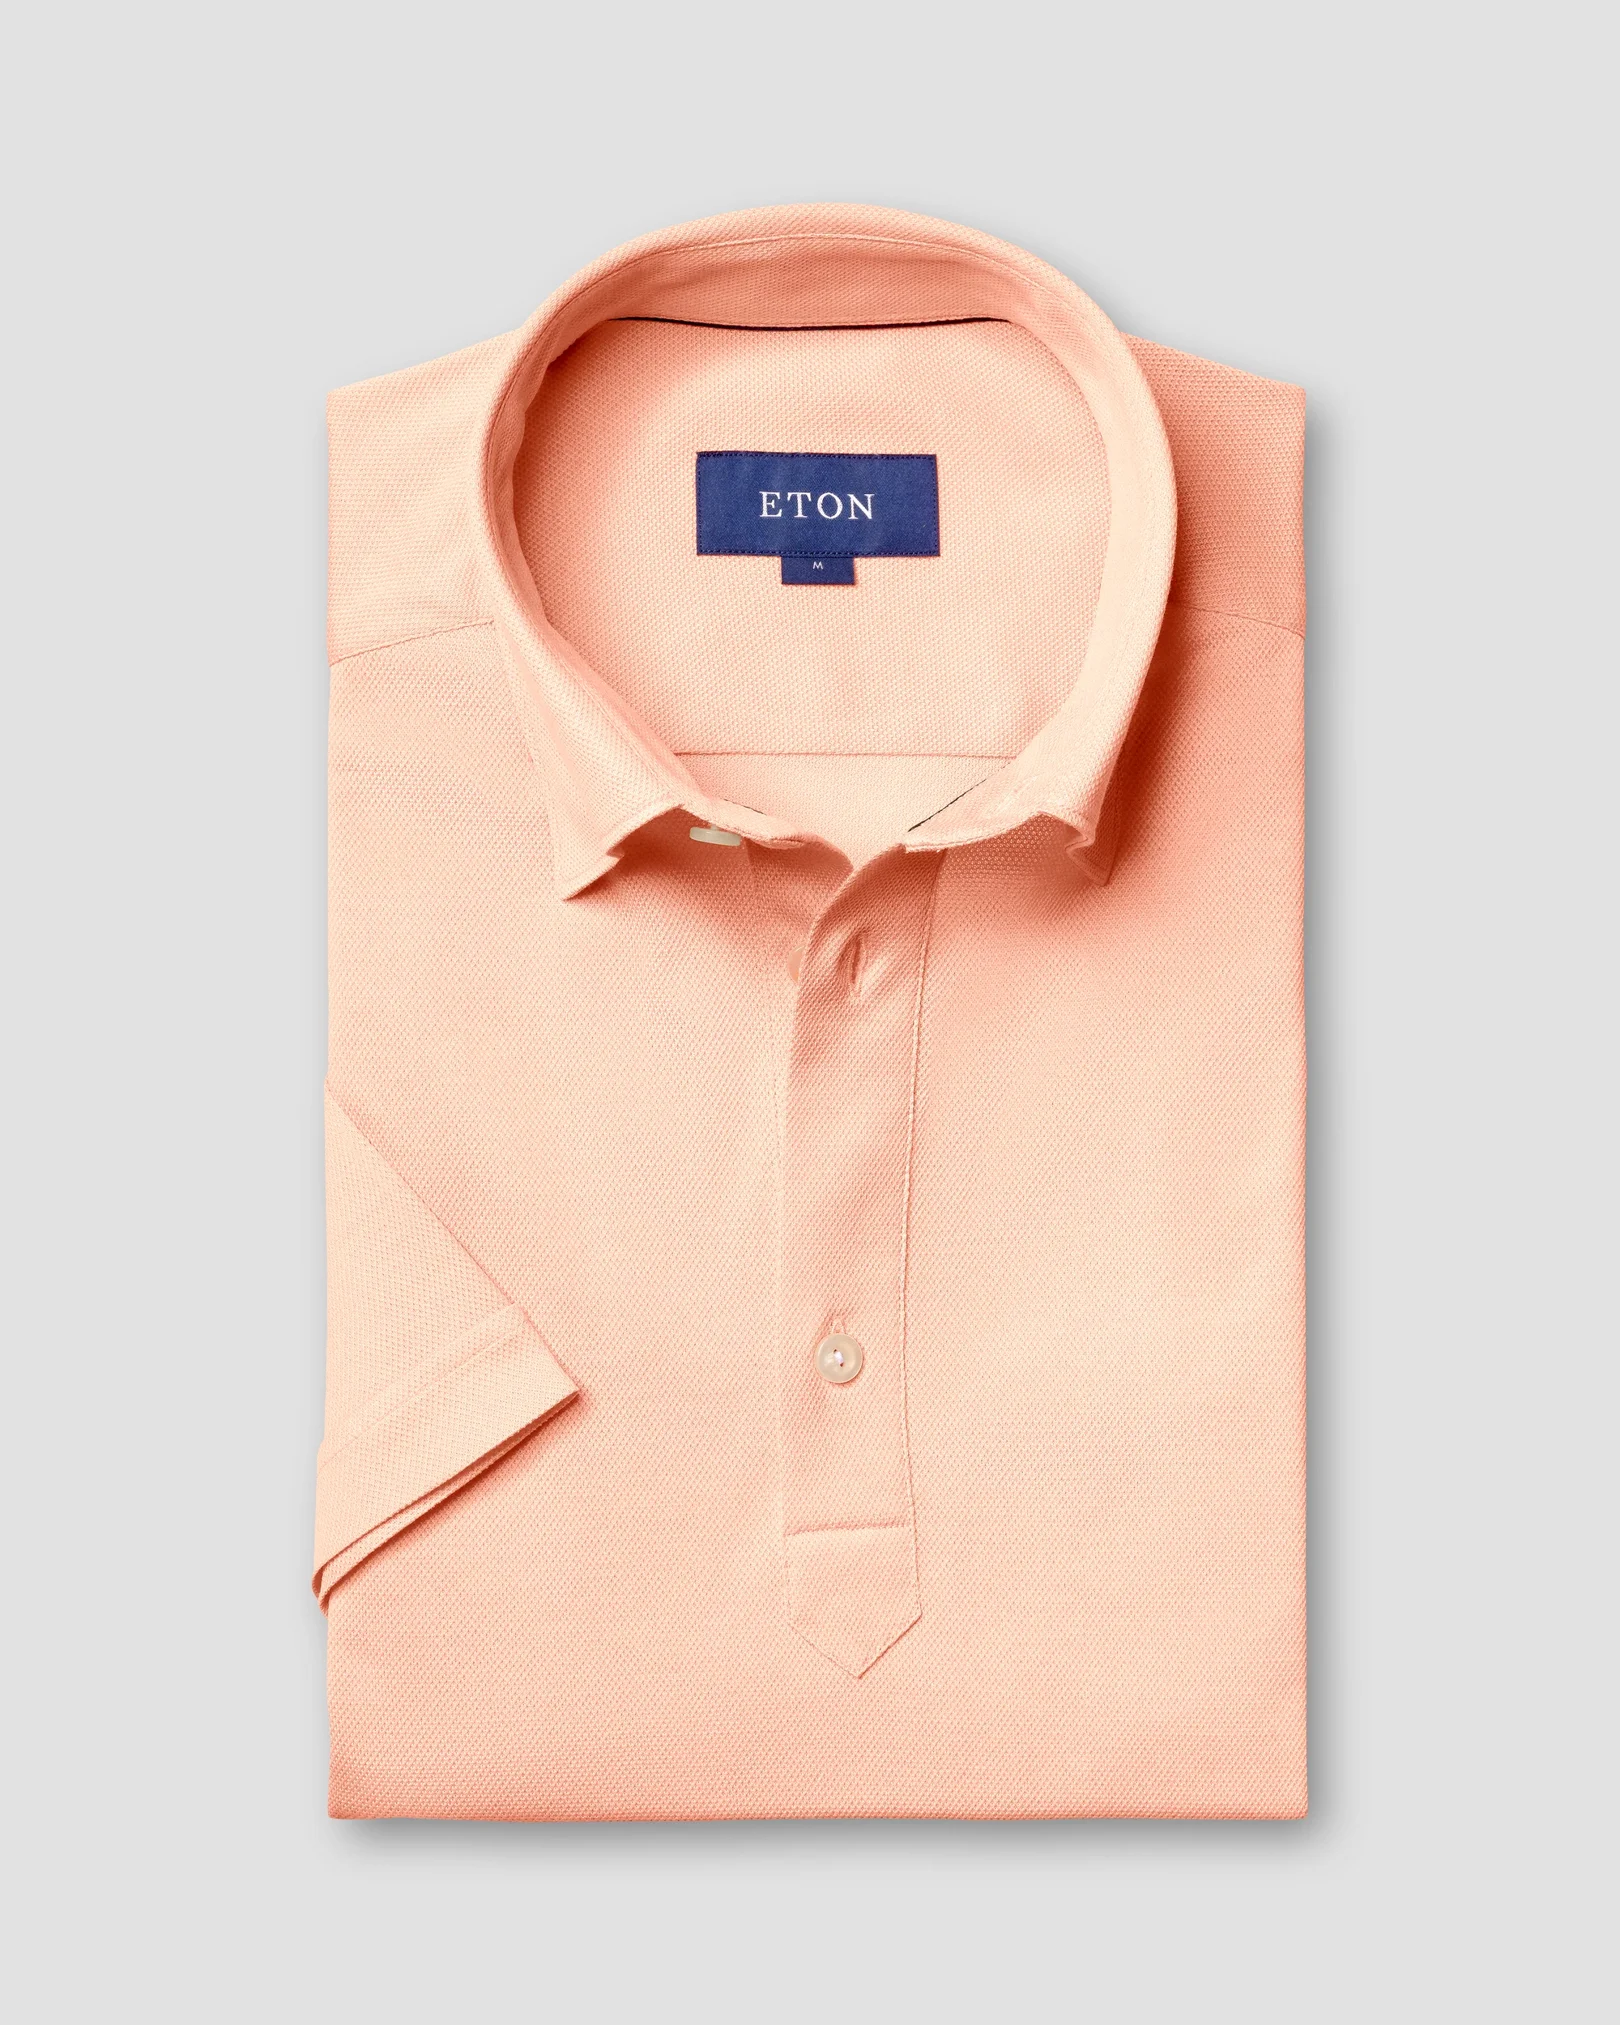 Eton - pink polo shirt button under